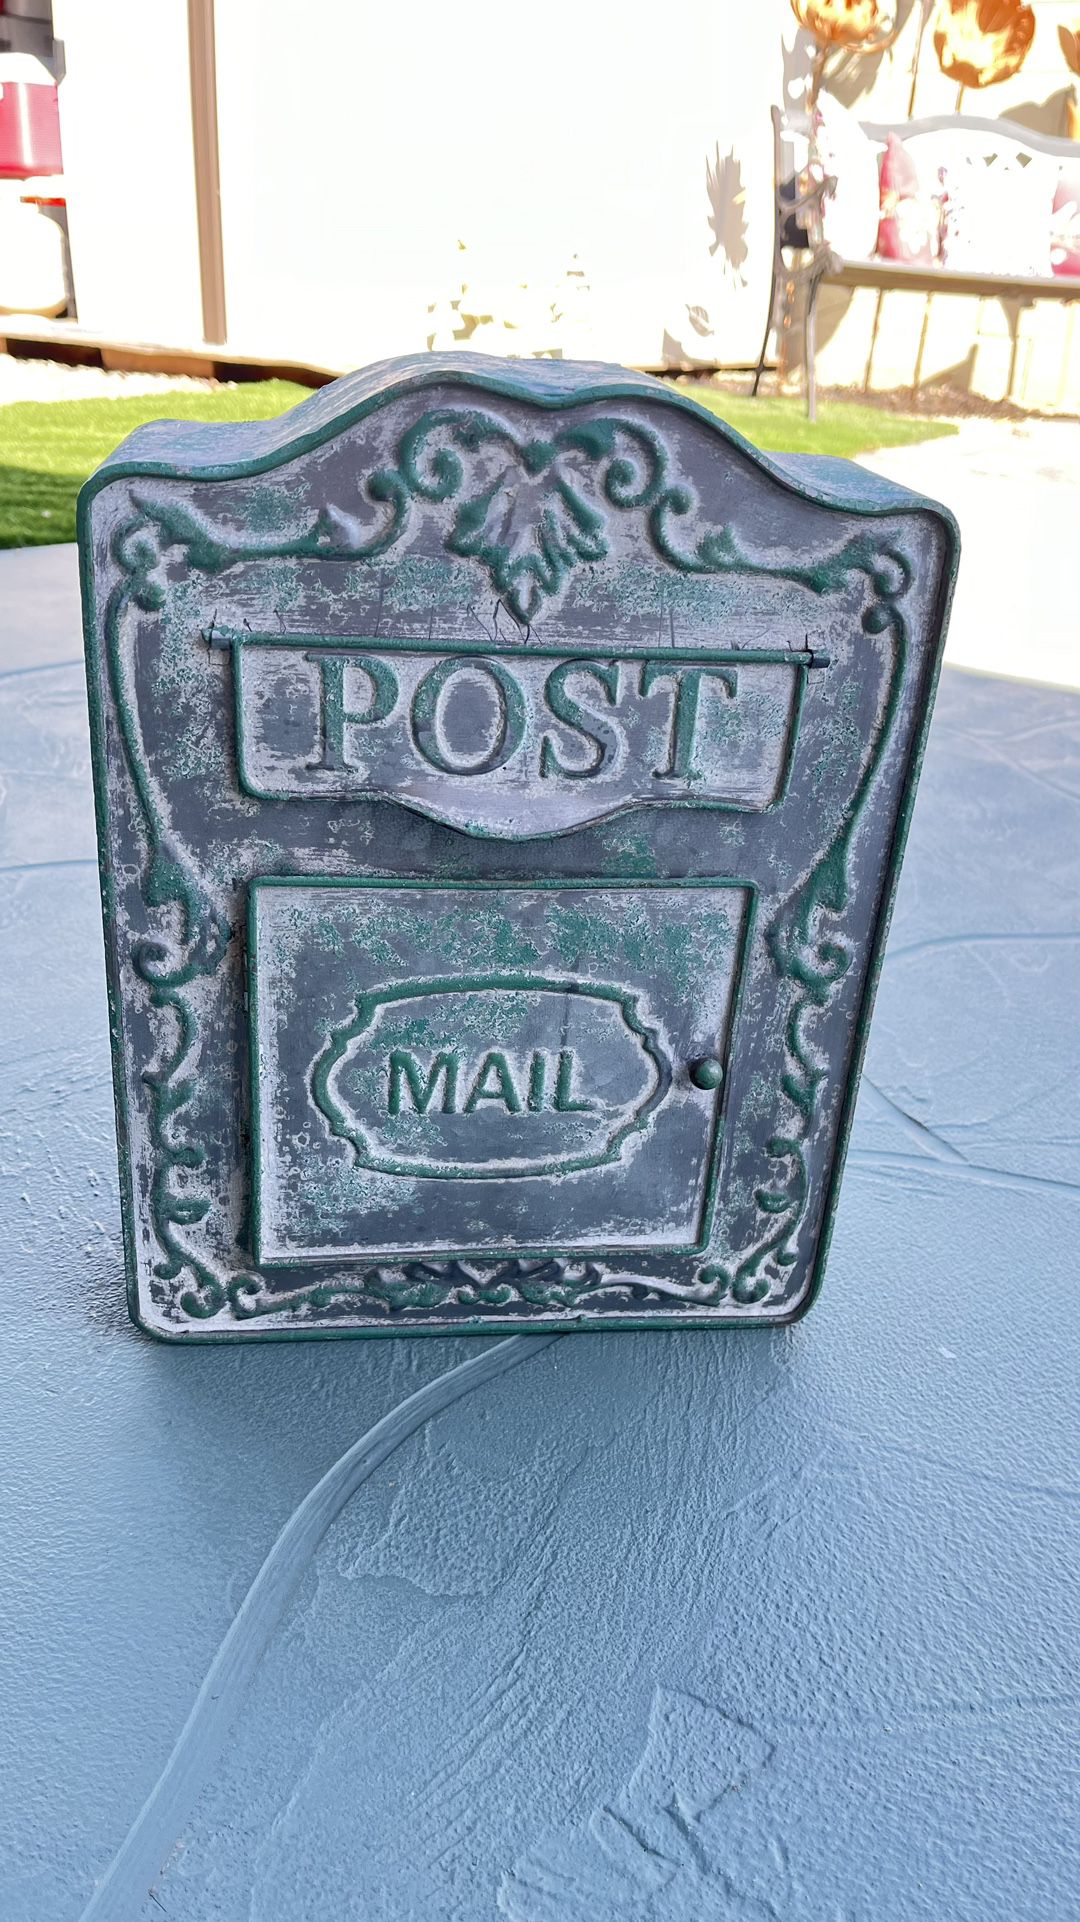 metal mail box 13”